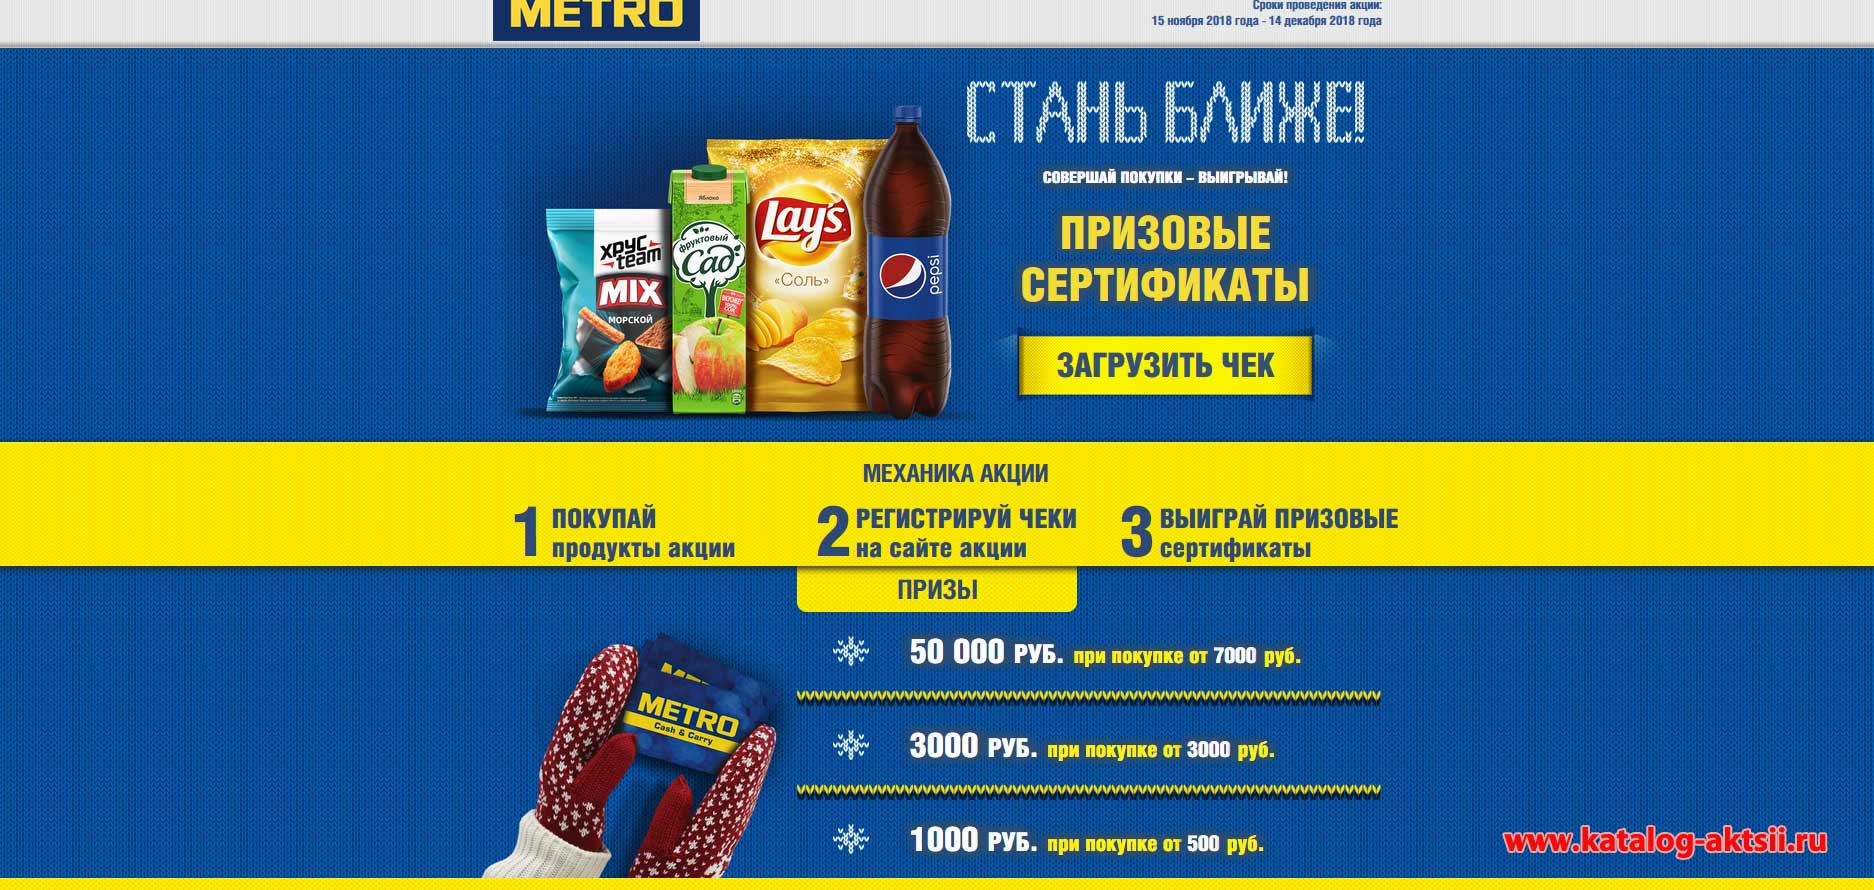 www.metro.pepsicopromo.ru : Регистрация